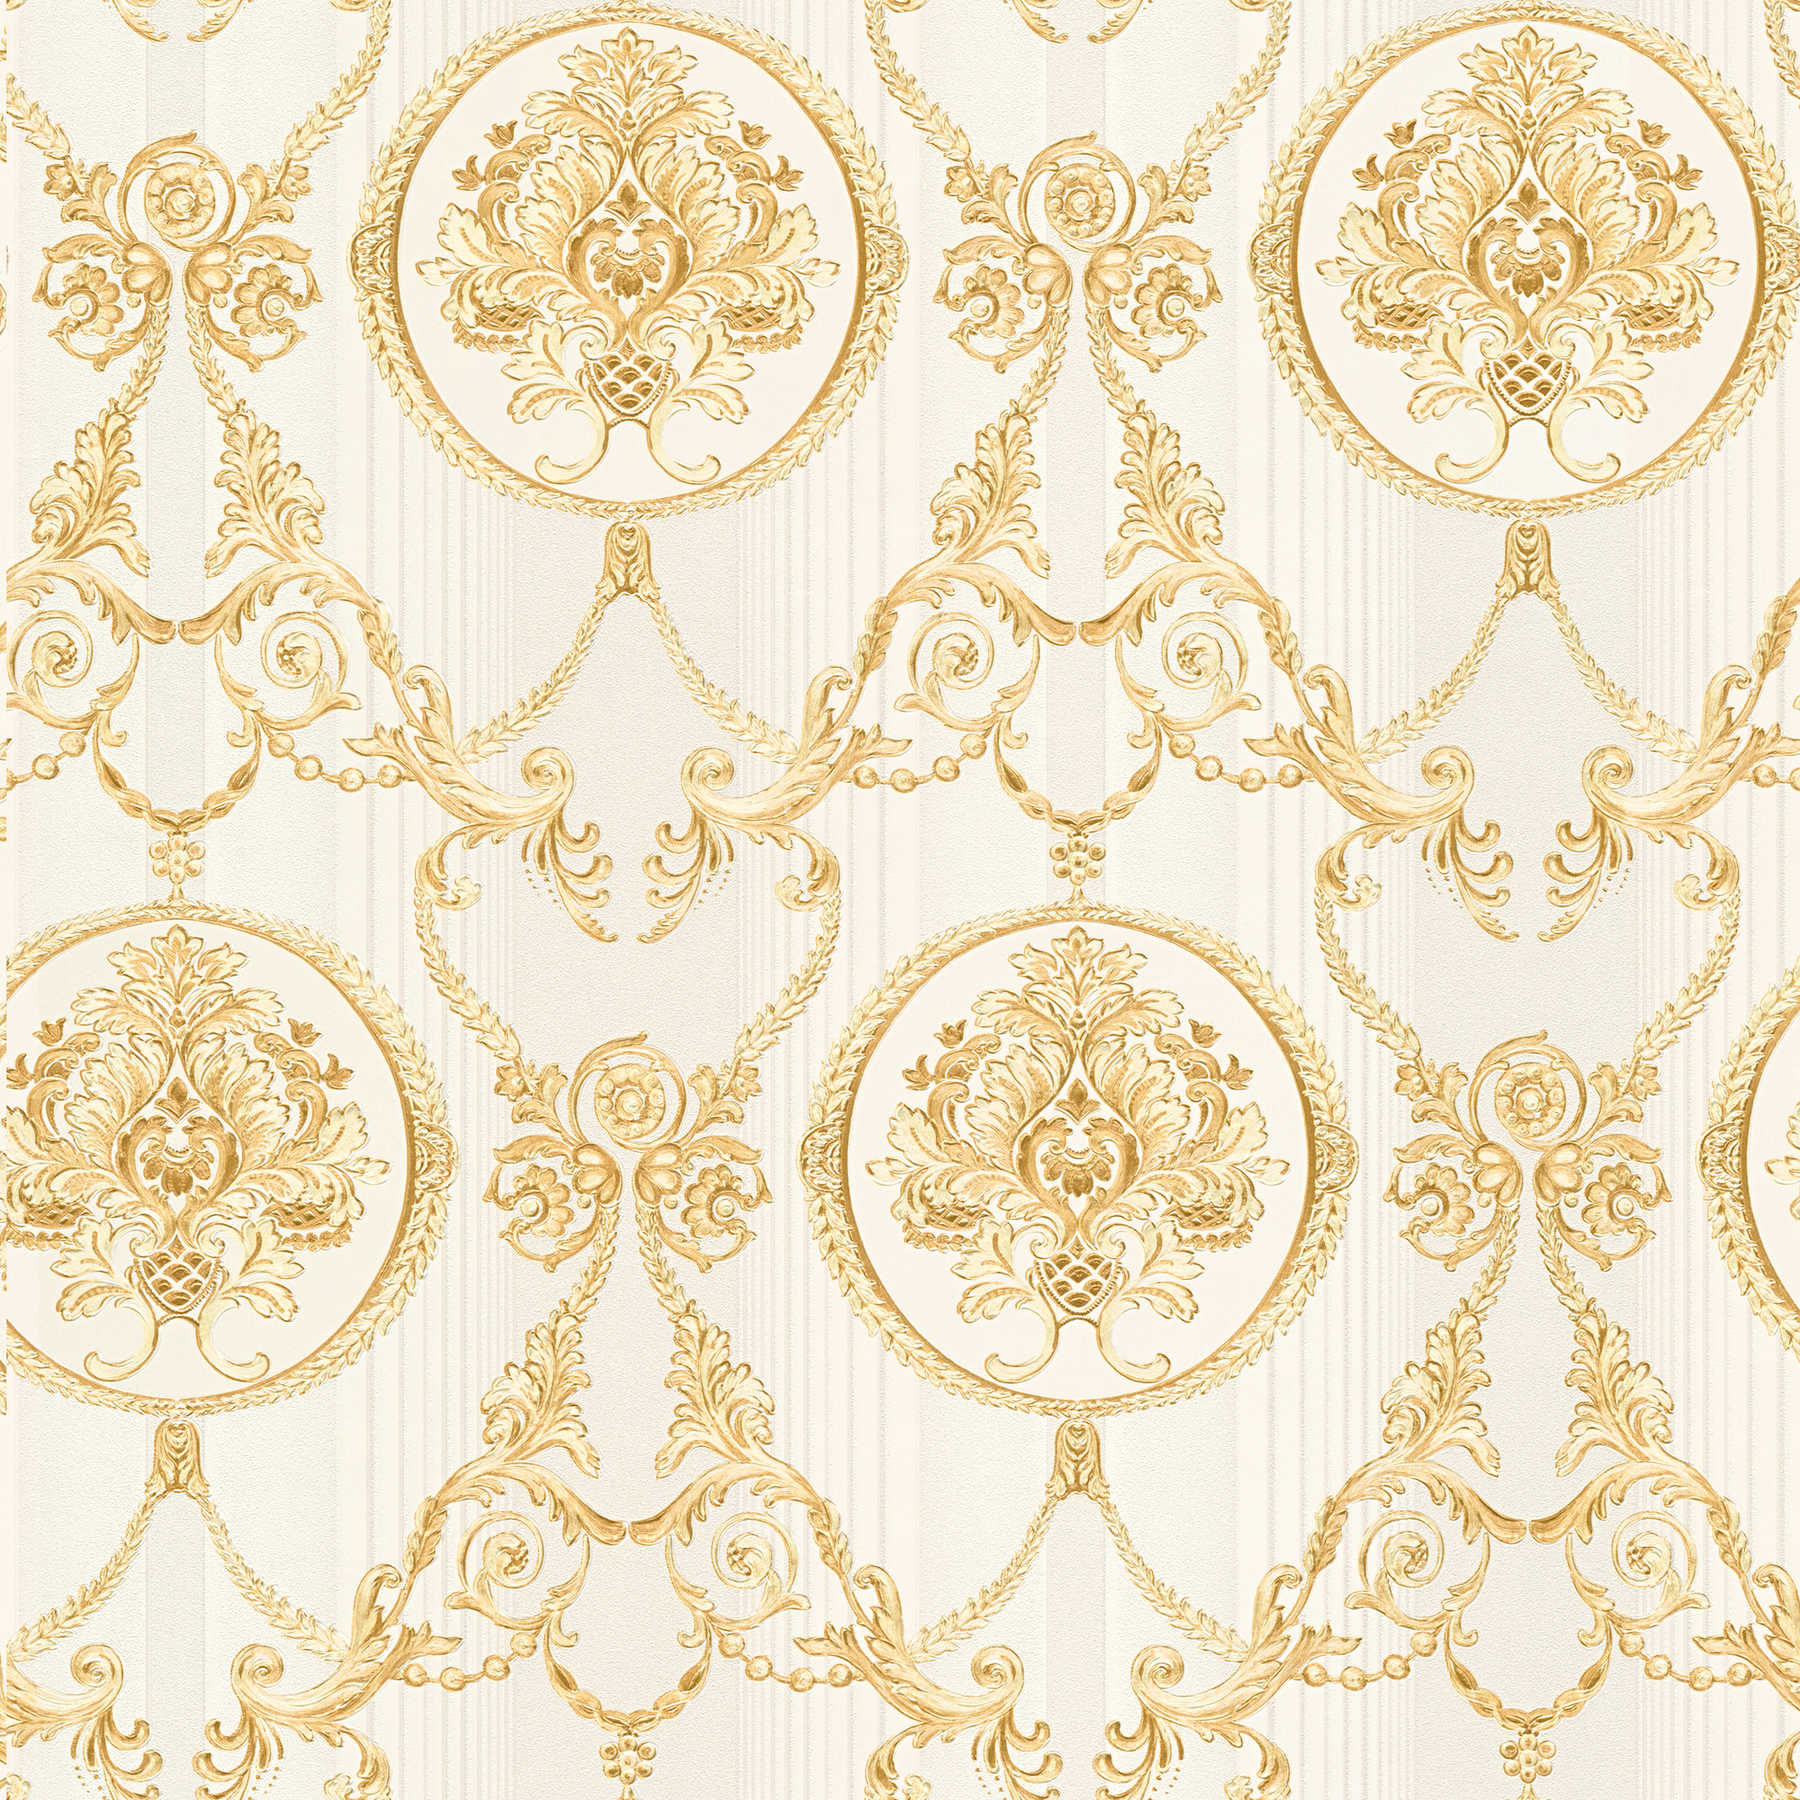 Vliestapete mit goldenem Ornamentdesign – Creme, Metallic
